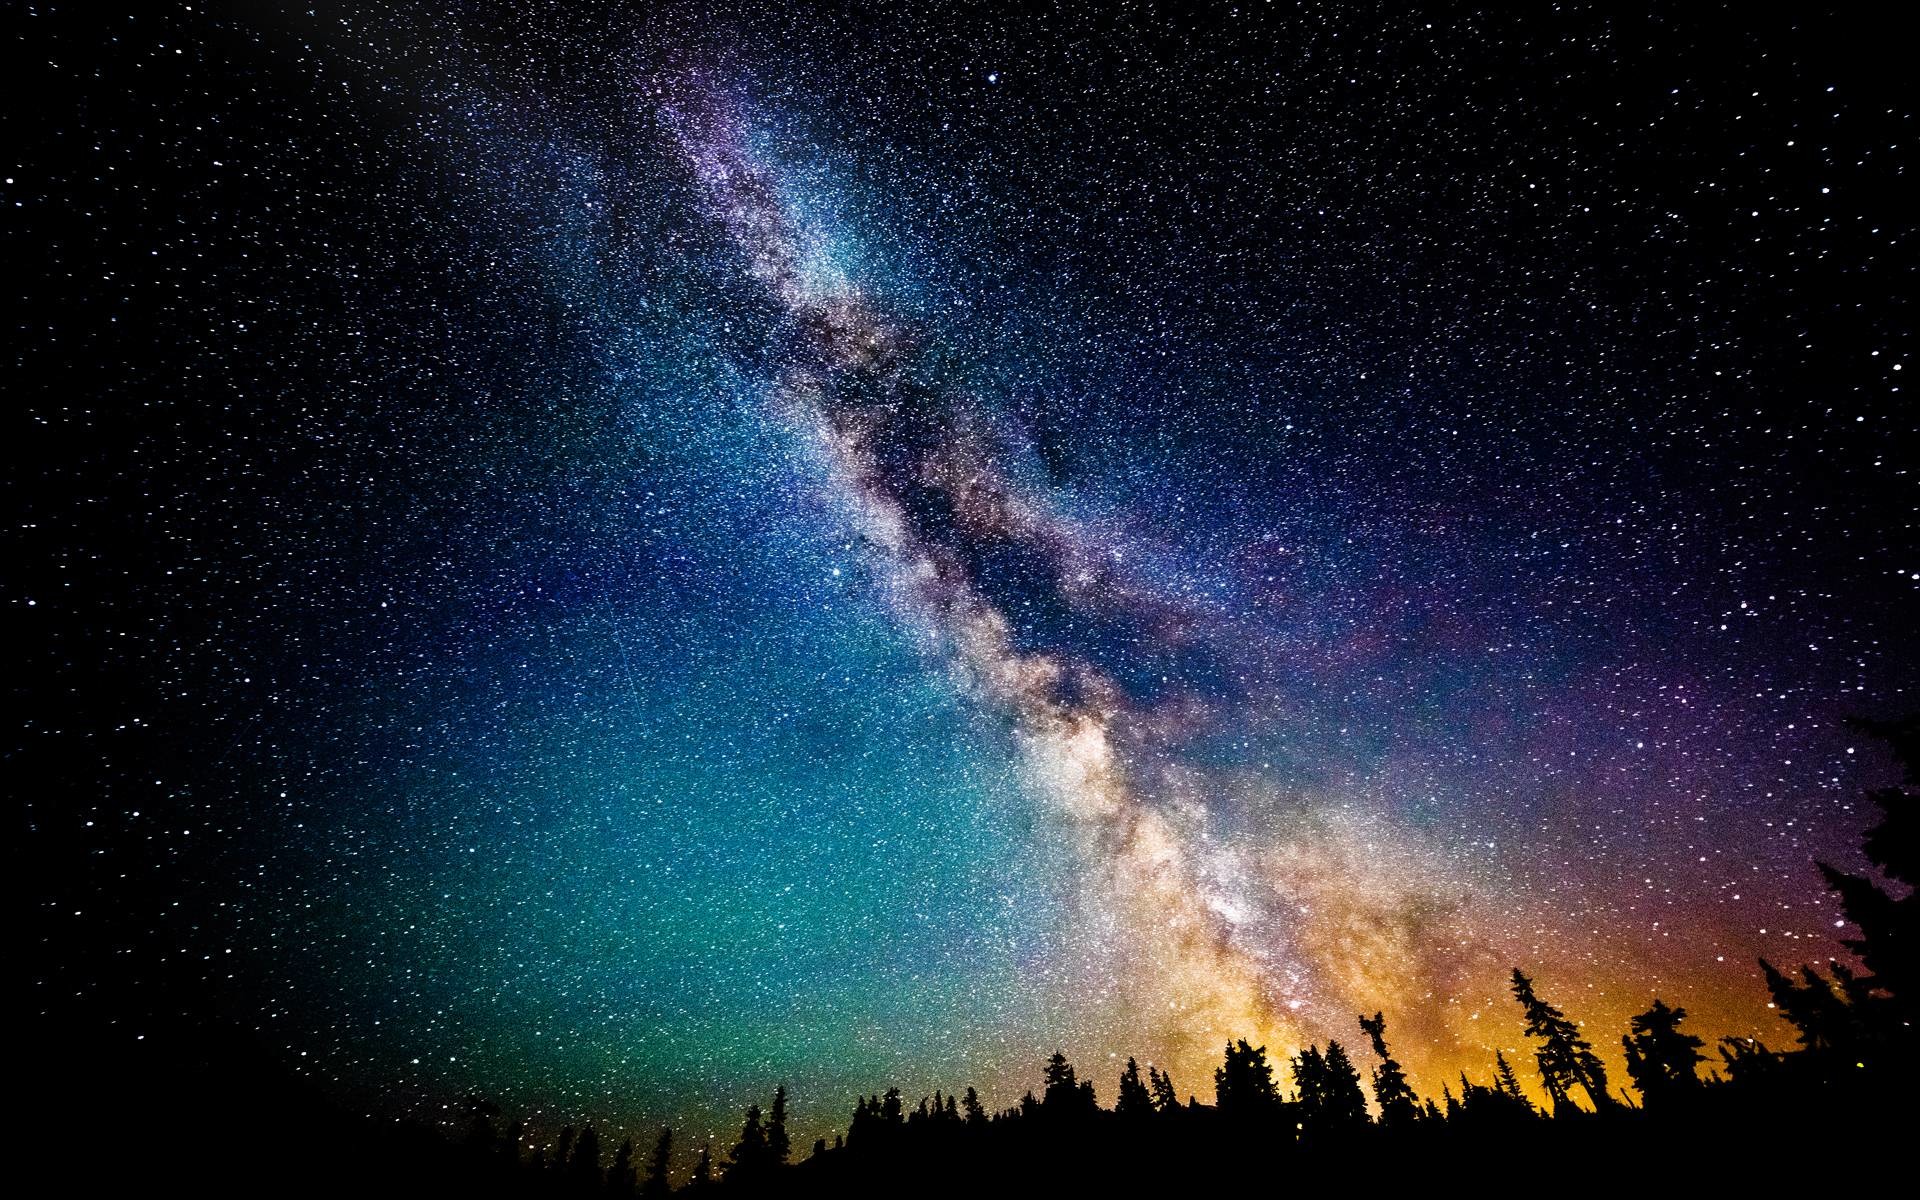 Stars Desktop Backgrounds the best 70 images in 2018